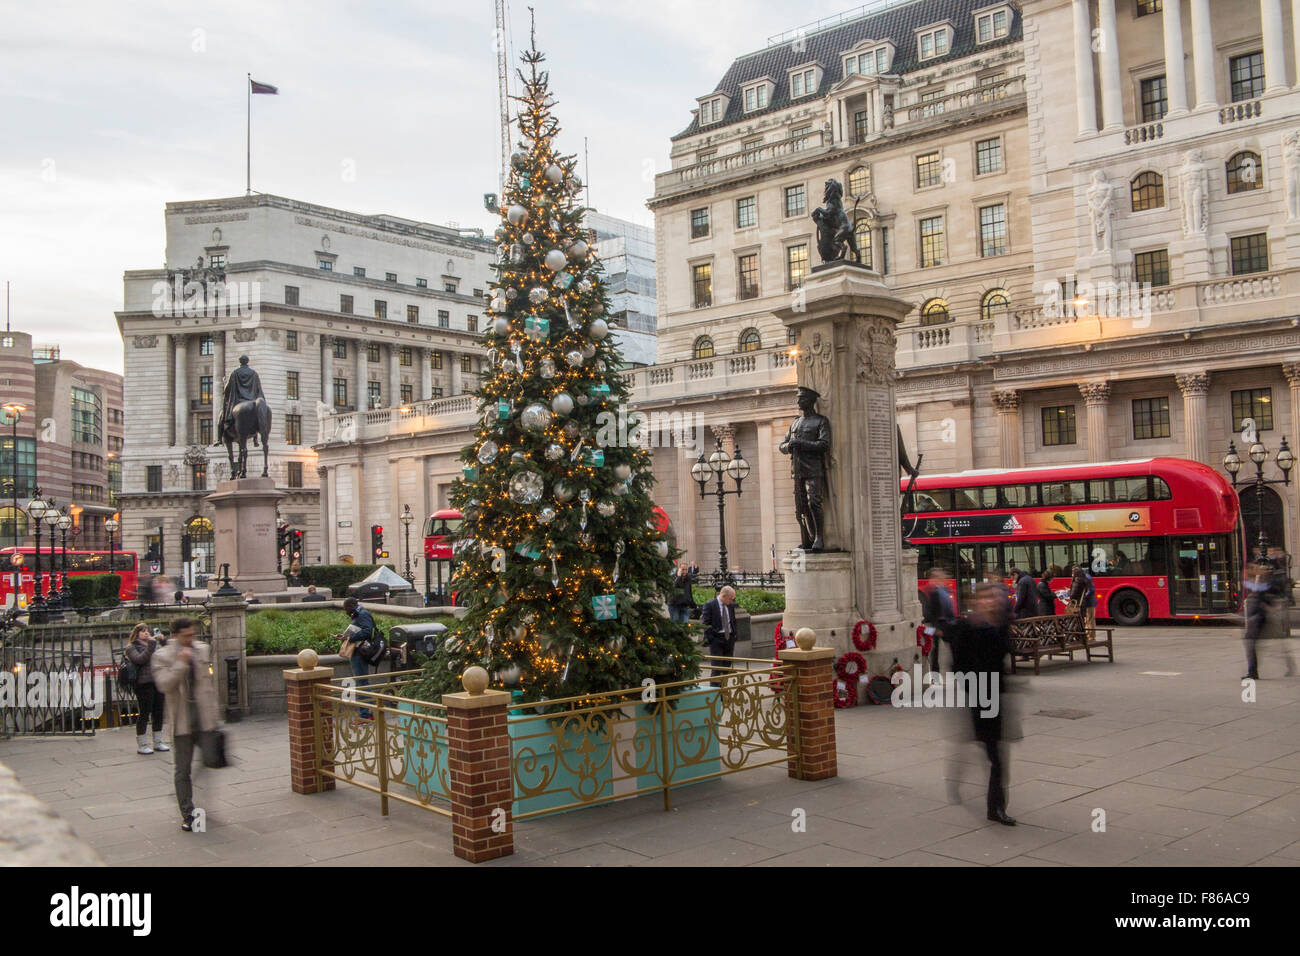 A Christmas tree at Bank Tube Station outside The Royal Exchange Stock Photo